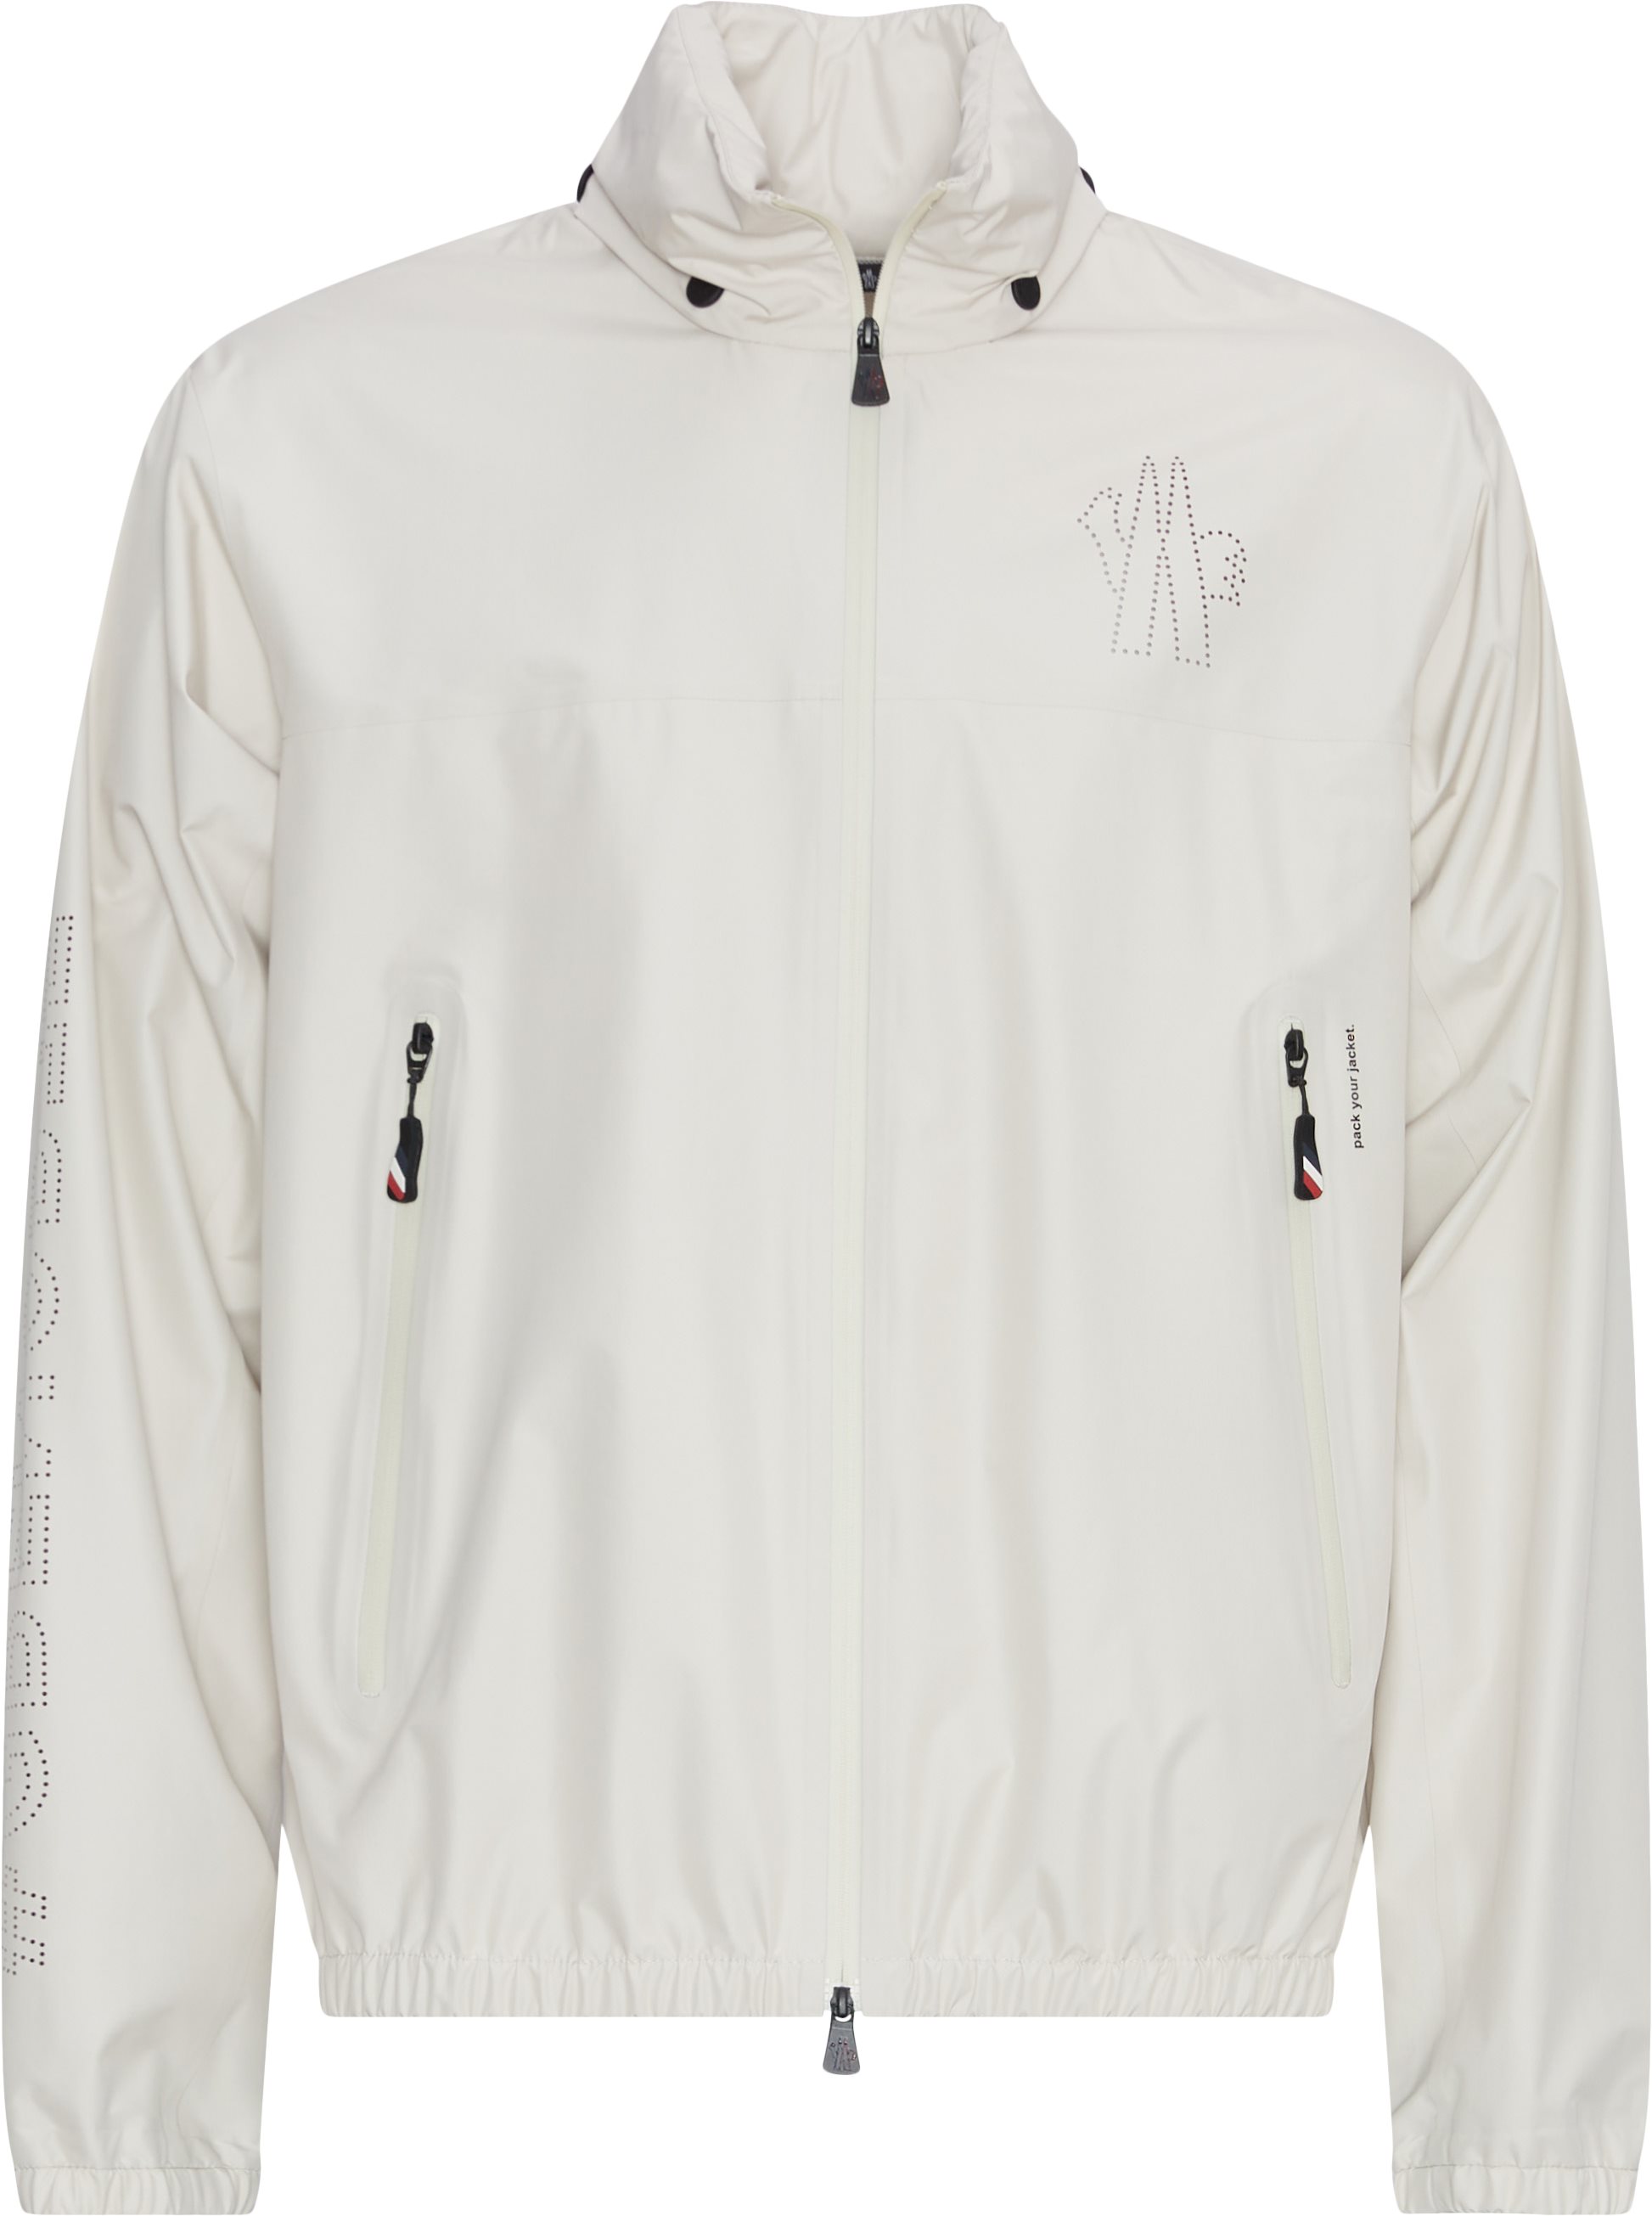 Moncler Grenoble Jackets VIELLE 1A00001 597C5 White